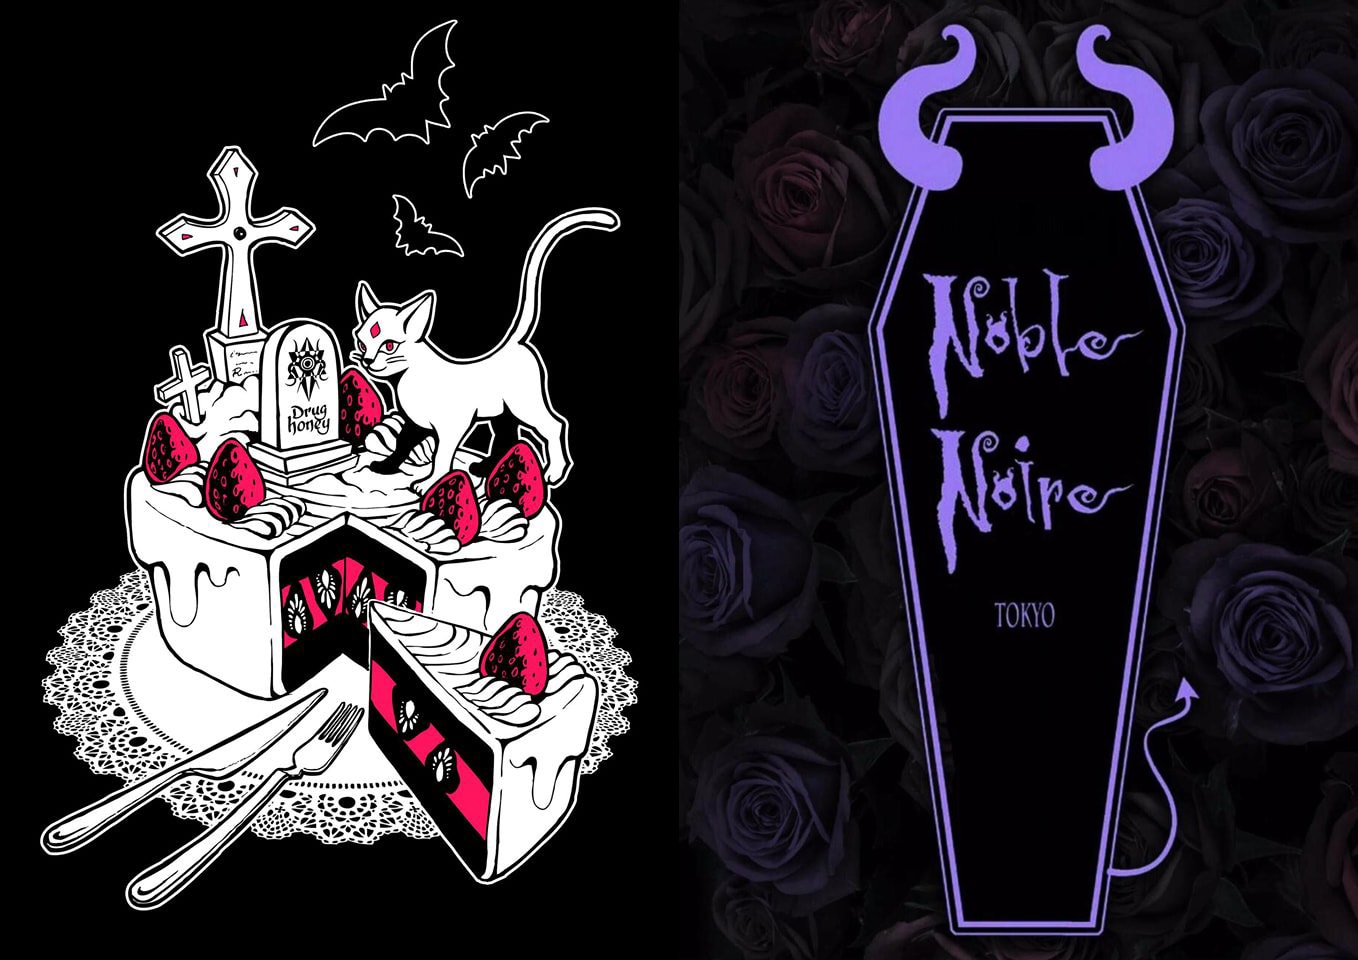 drug honey and noble noire logos